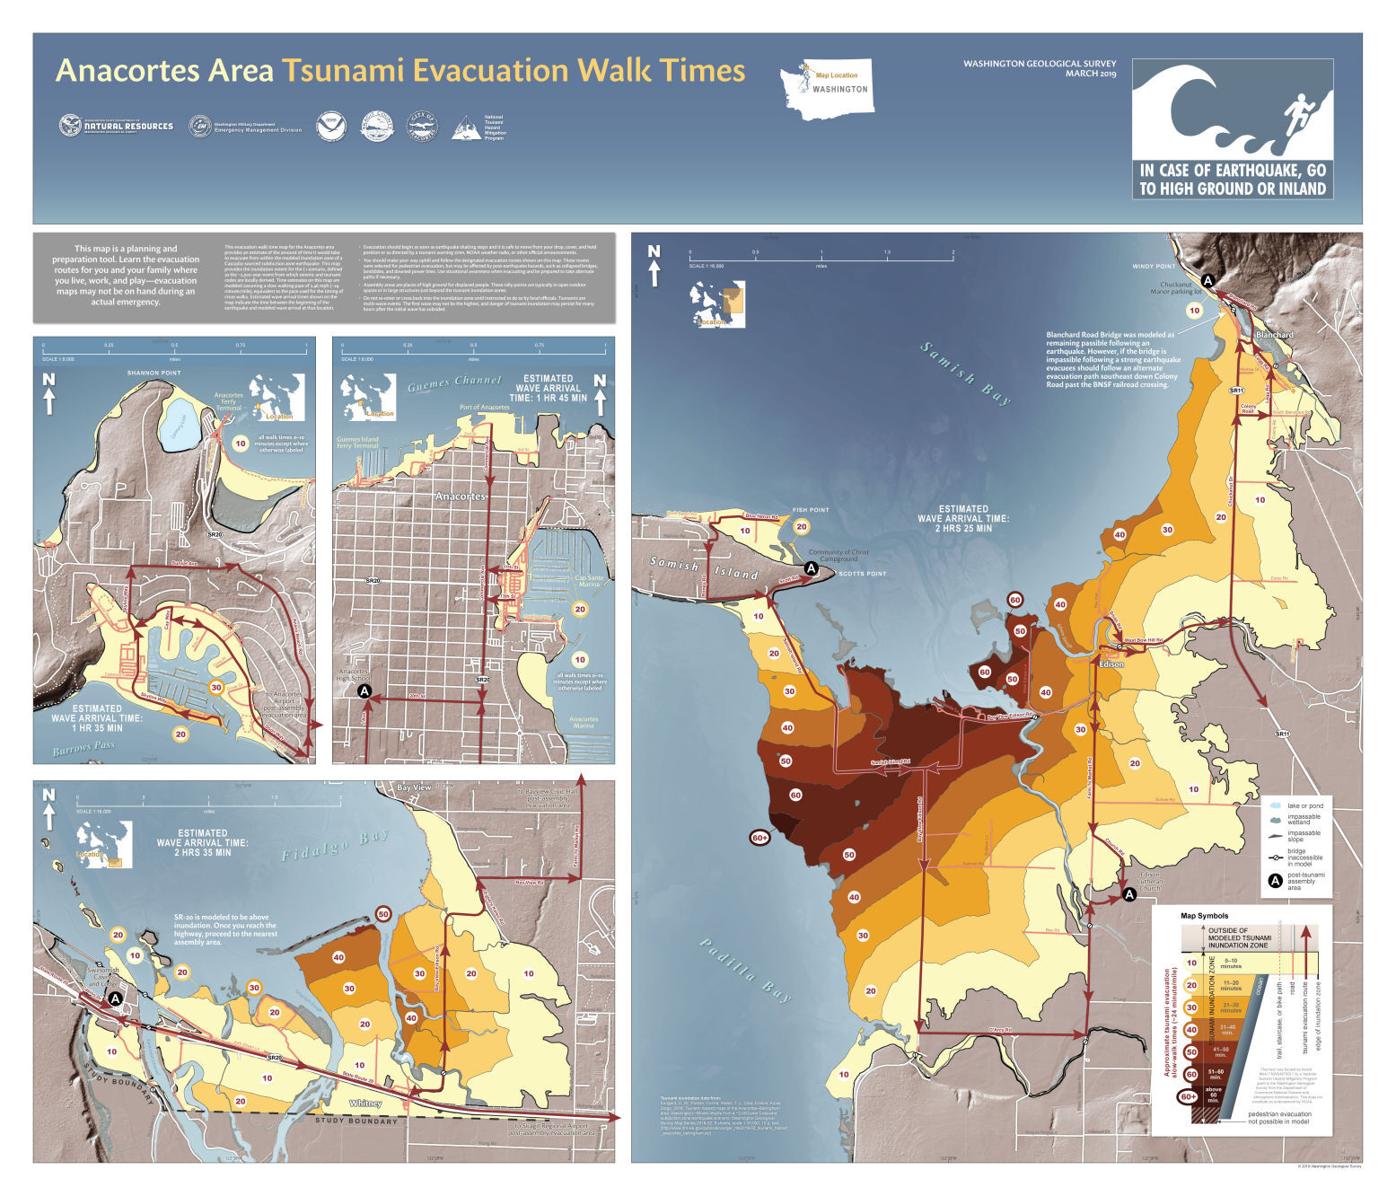 tsunami evacuation maps for washington